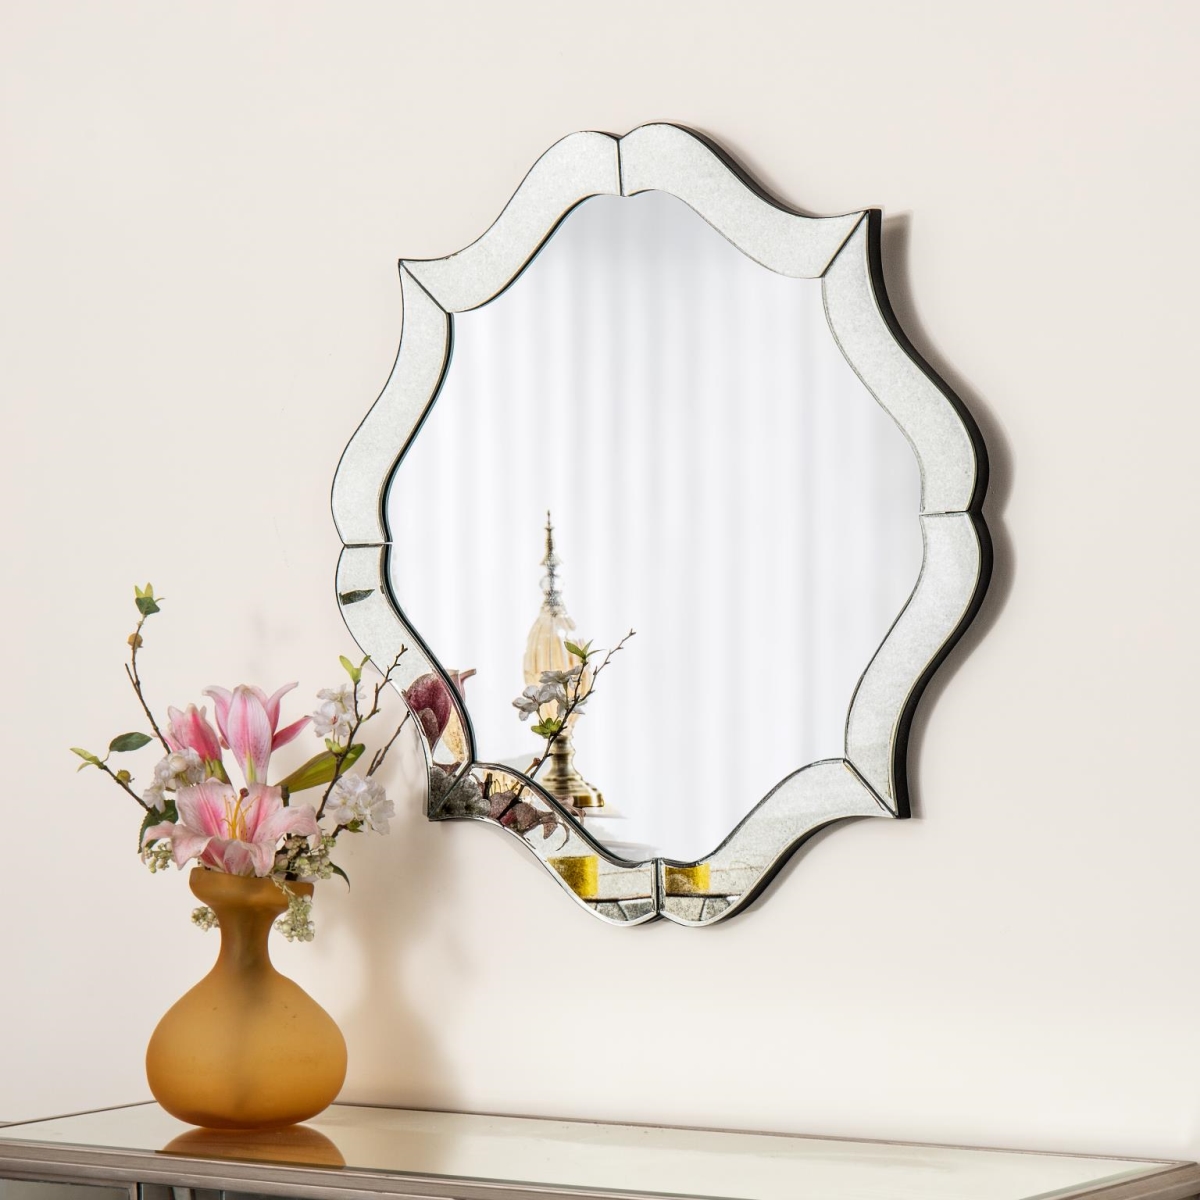 Myco Furniture Vl904 1 X 30 X 30 In. Valencia Wall Mirror, Clear Mirror